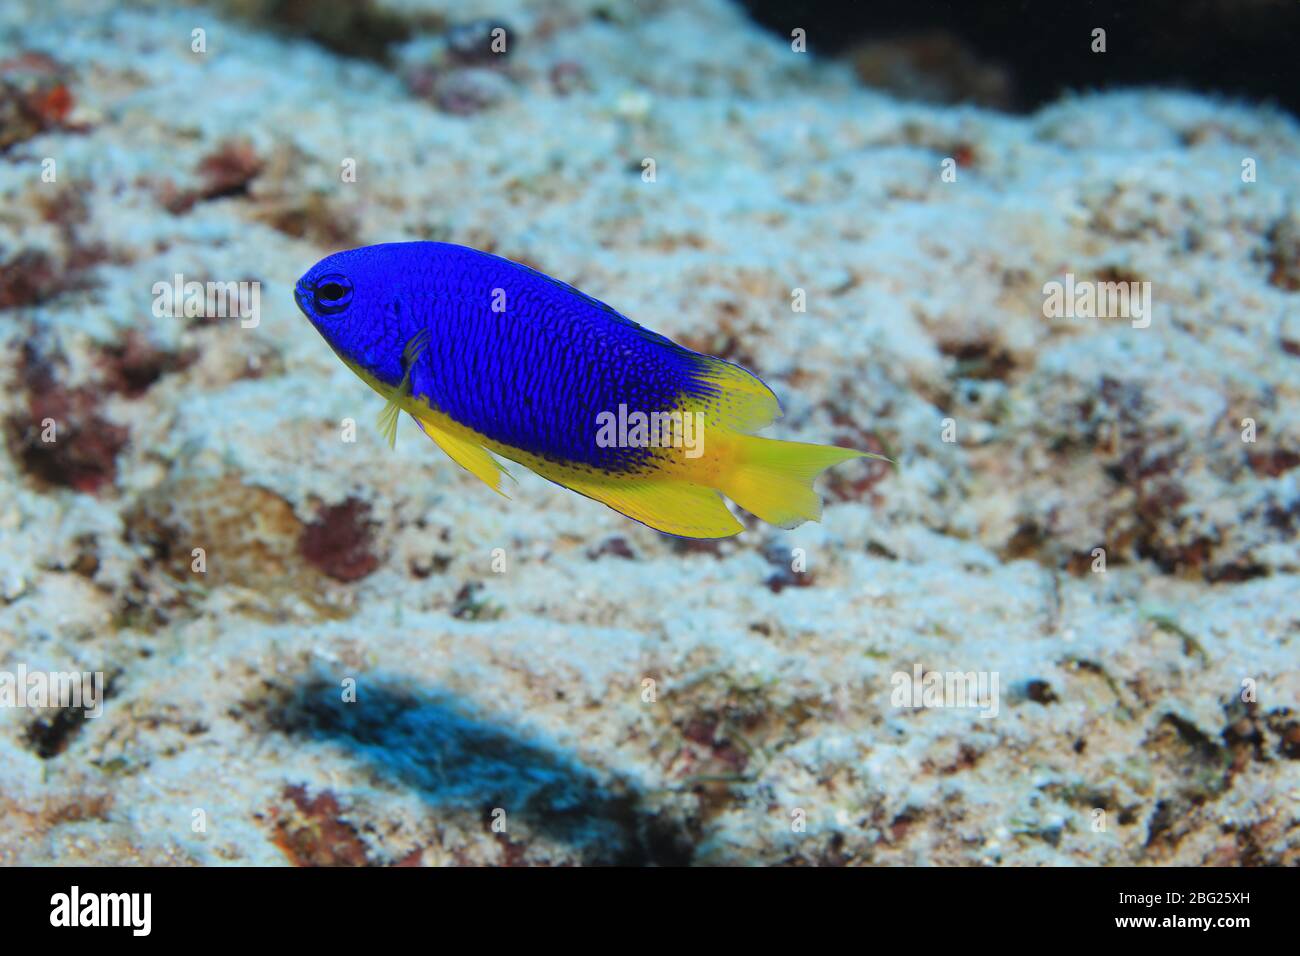 Caerulean damsel fish (Pomacentrus caeruleus) underwater in the Indian Ocean Stock Photo